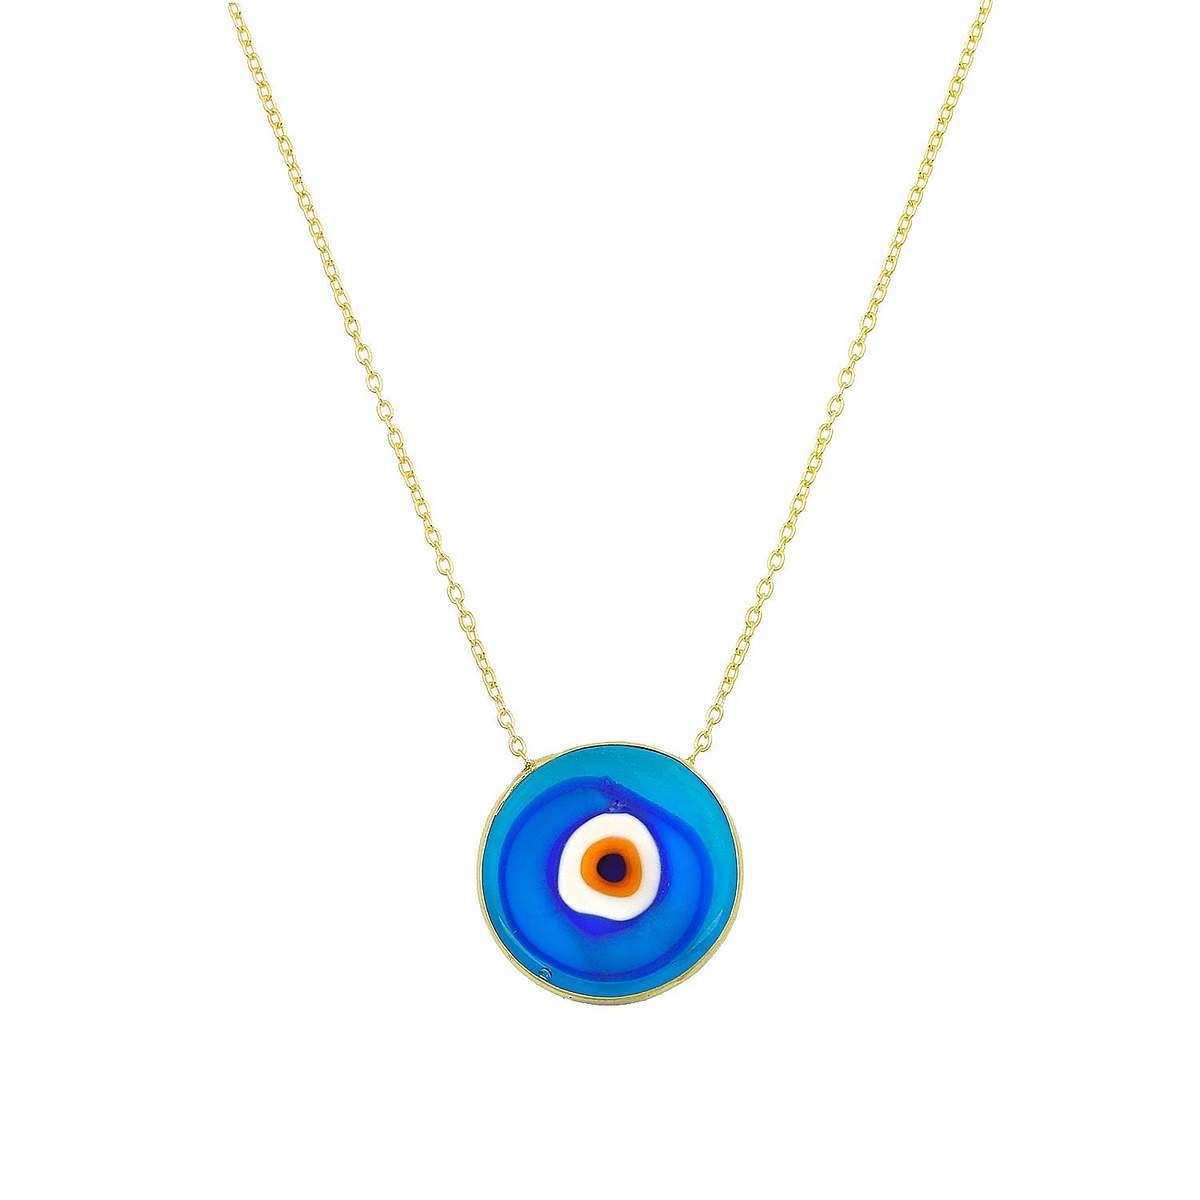 Antique Evil Eye Necklace in Cerulean